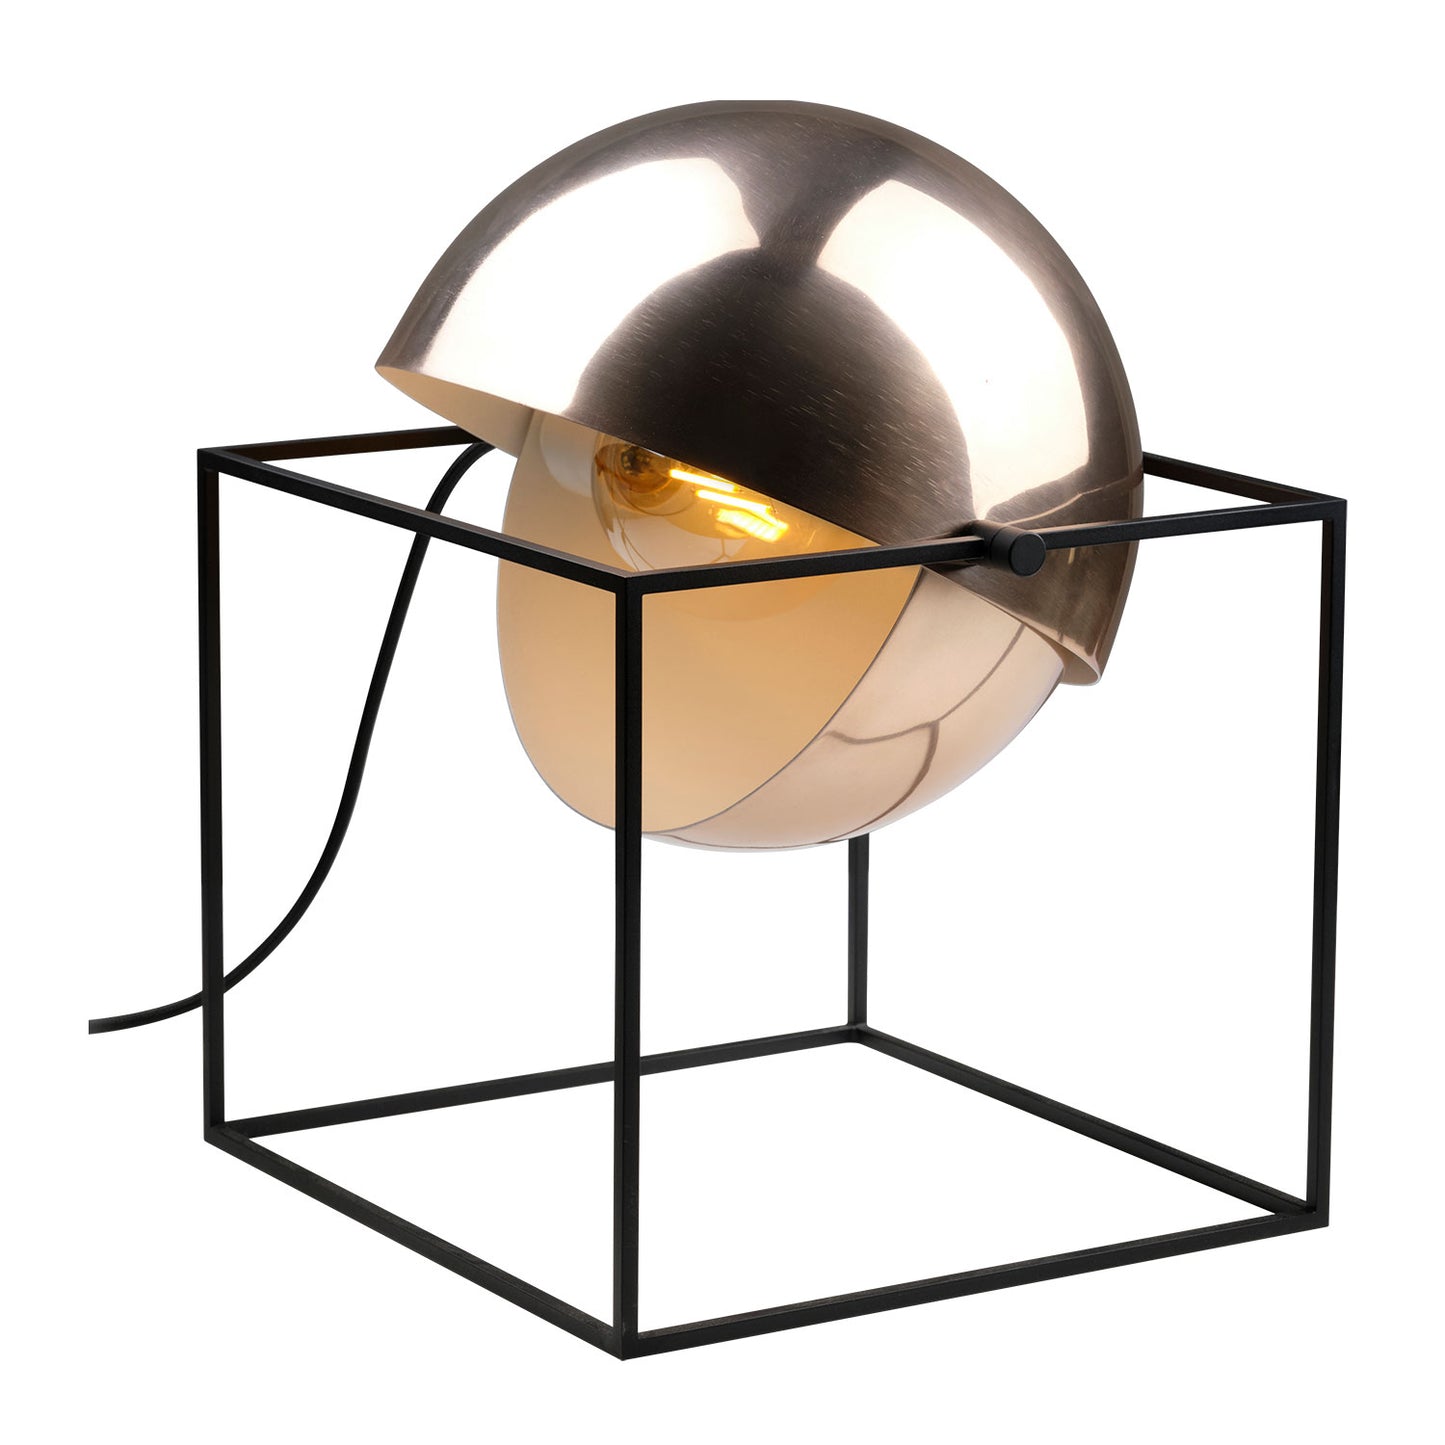 El Cubo Table Lamp by Carpyen